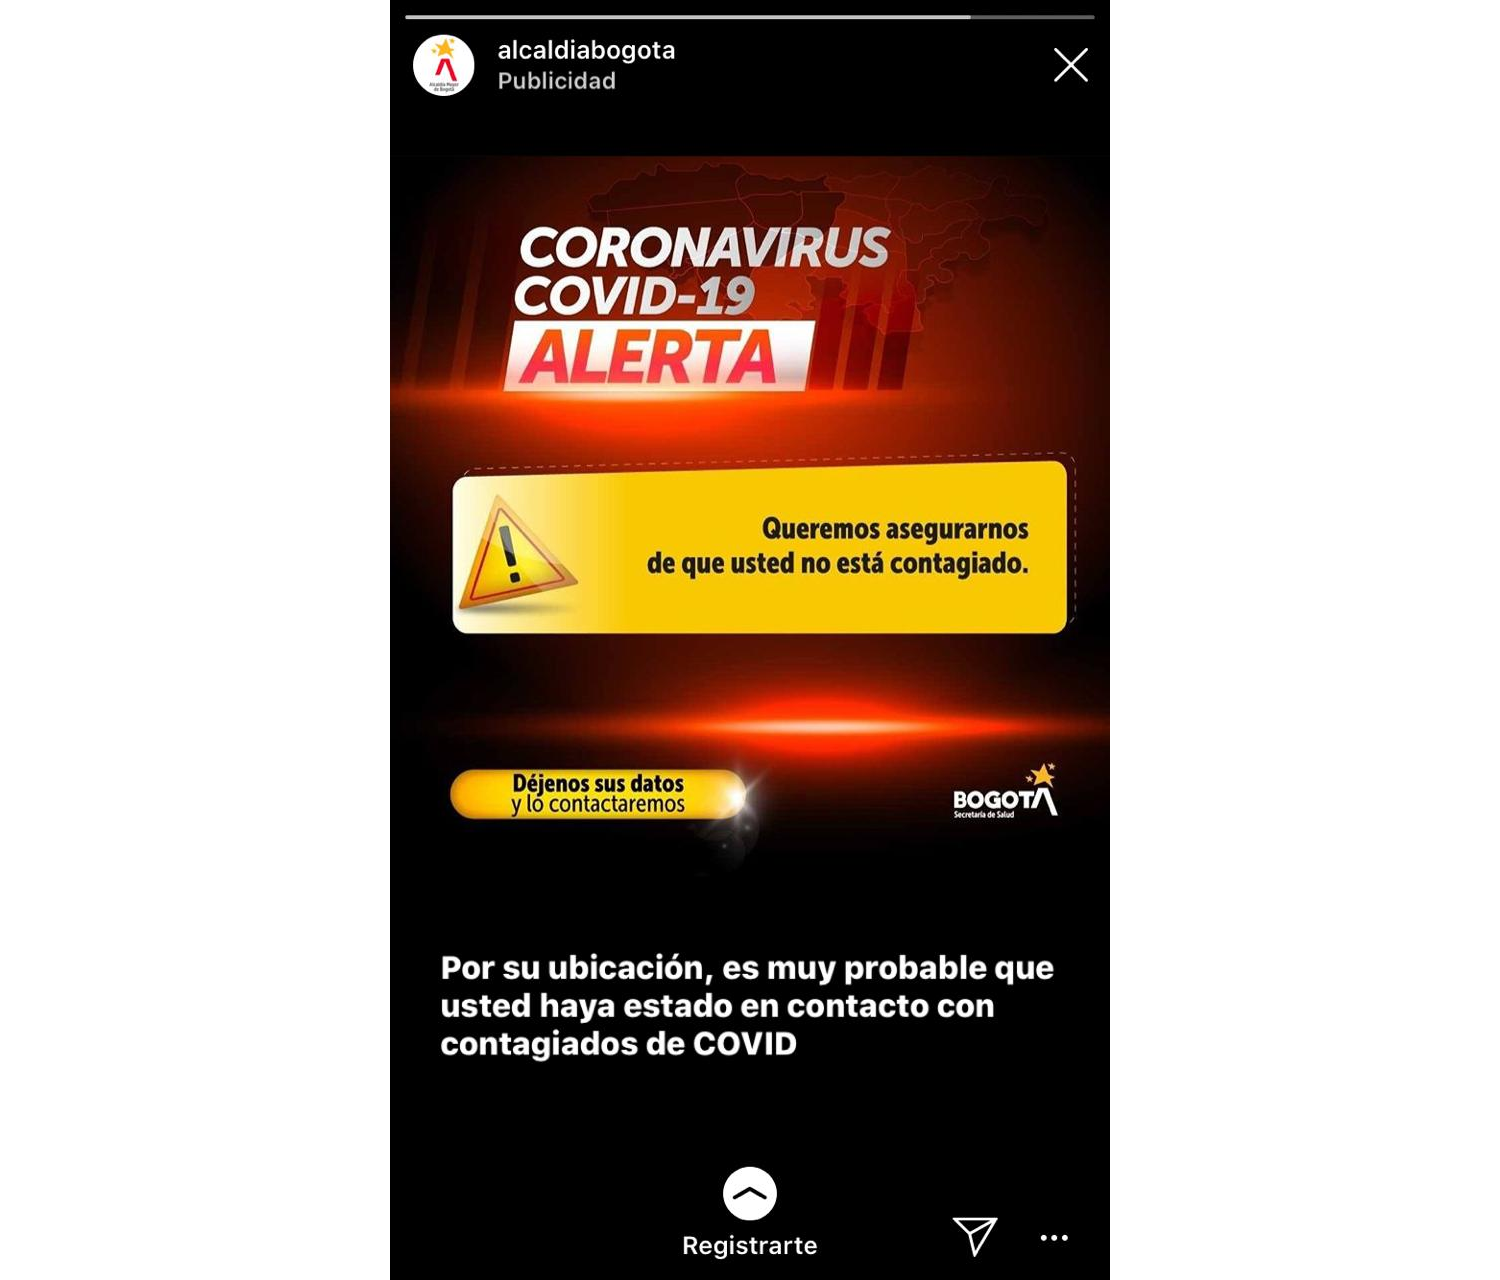 Instagram ad sent by Bogota's Mayor Office